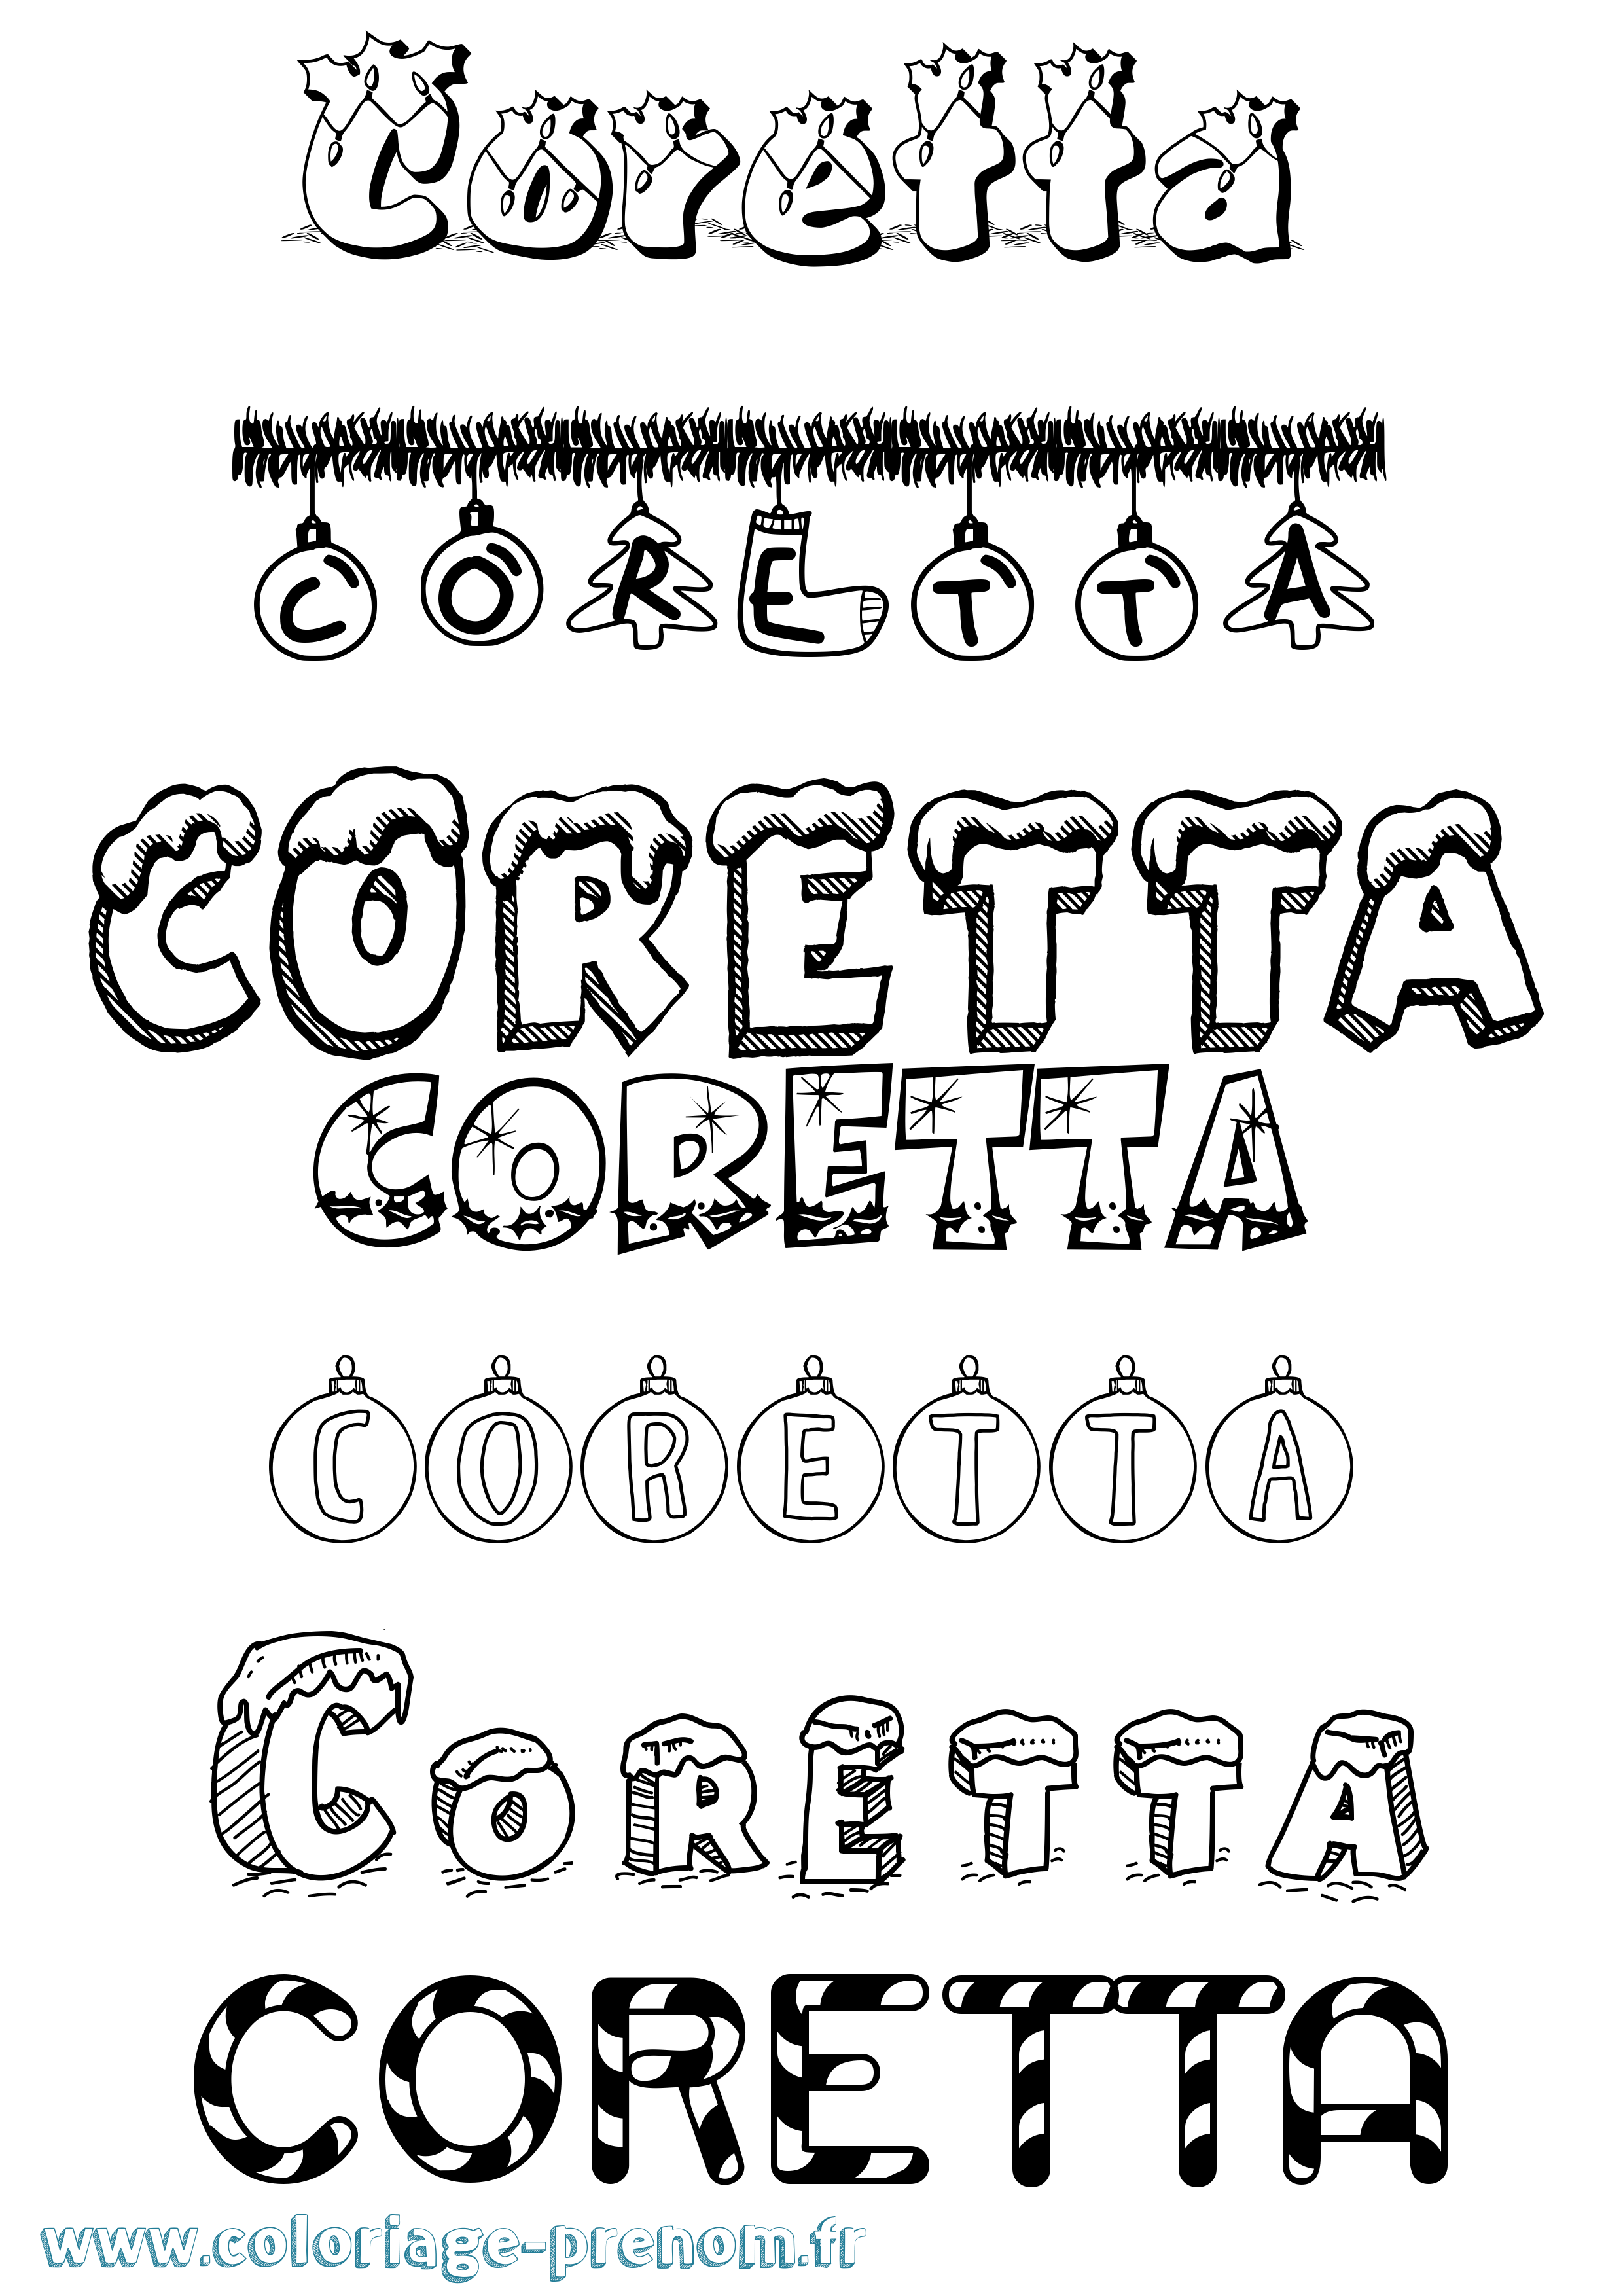 Coloriage prénom Coretta Noël